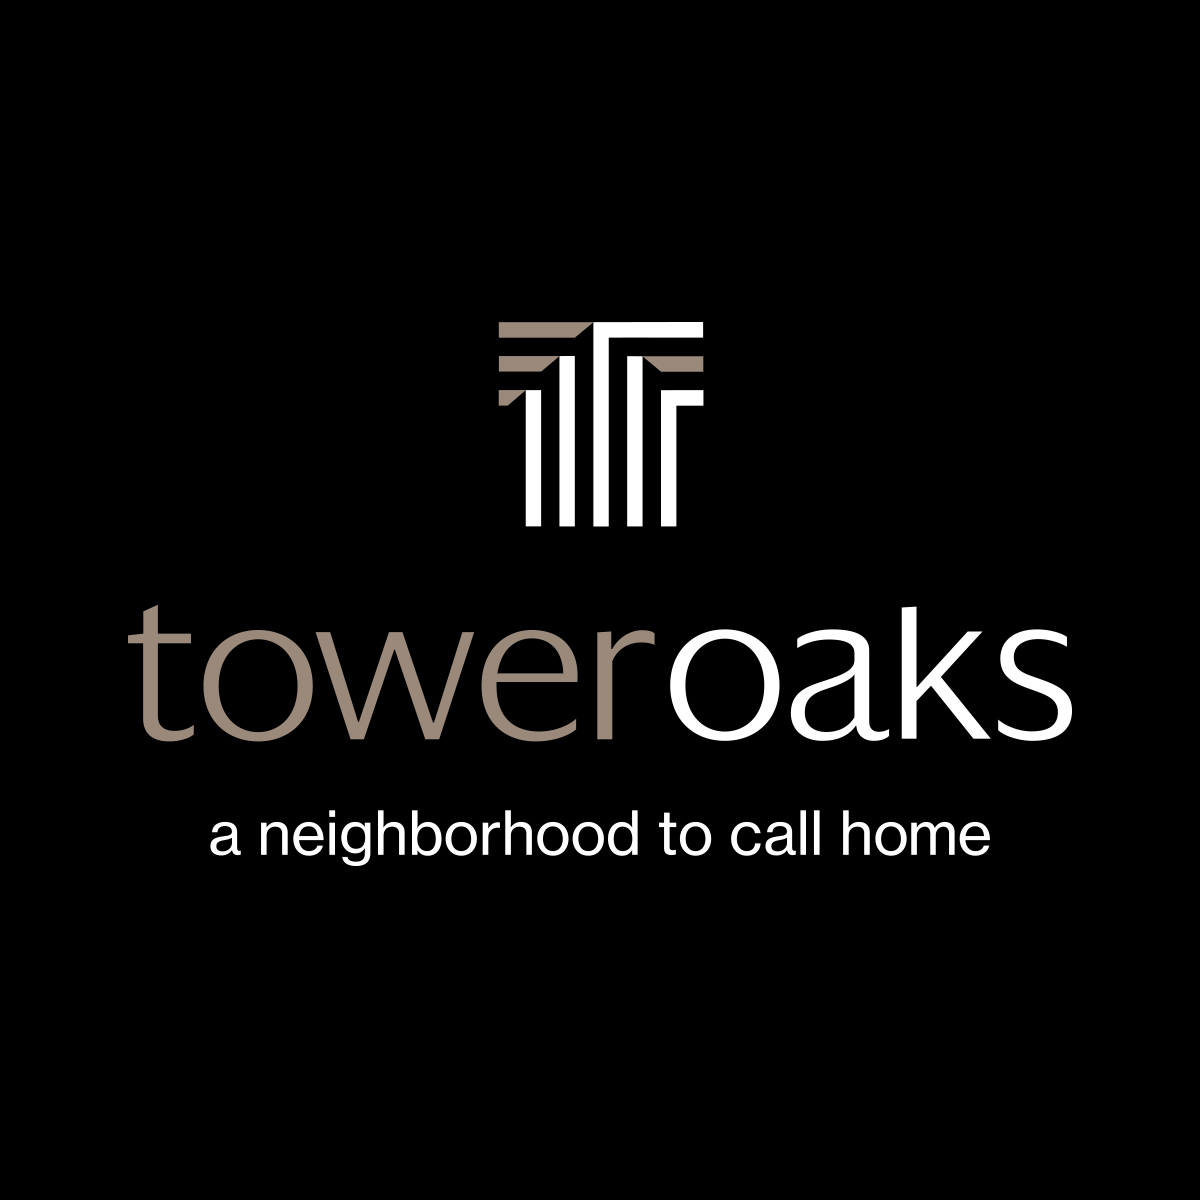 Tower Oaks logo